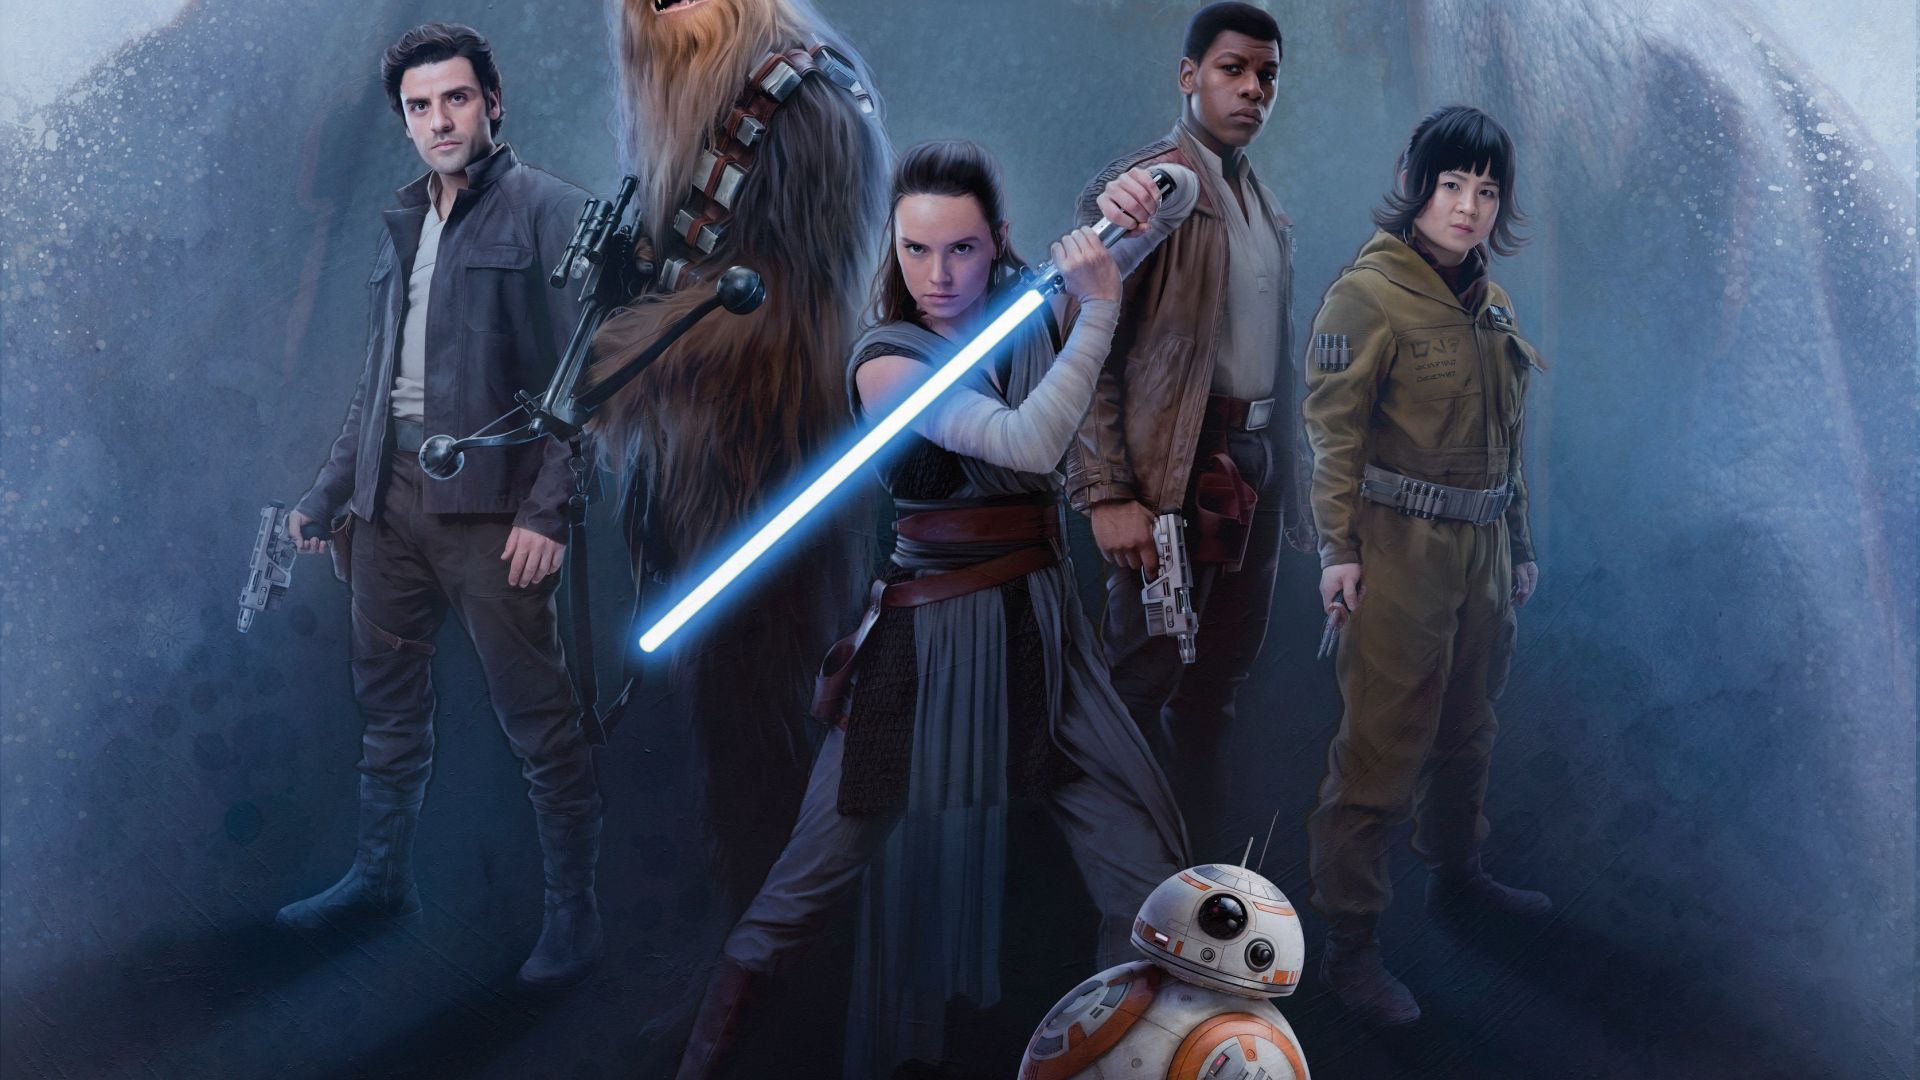 Wallpaper Star Wars: The Last Jedi, promo poster, artwork